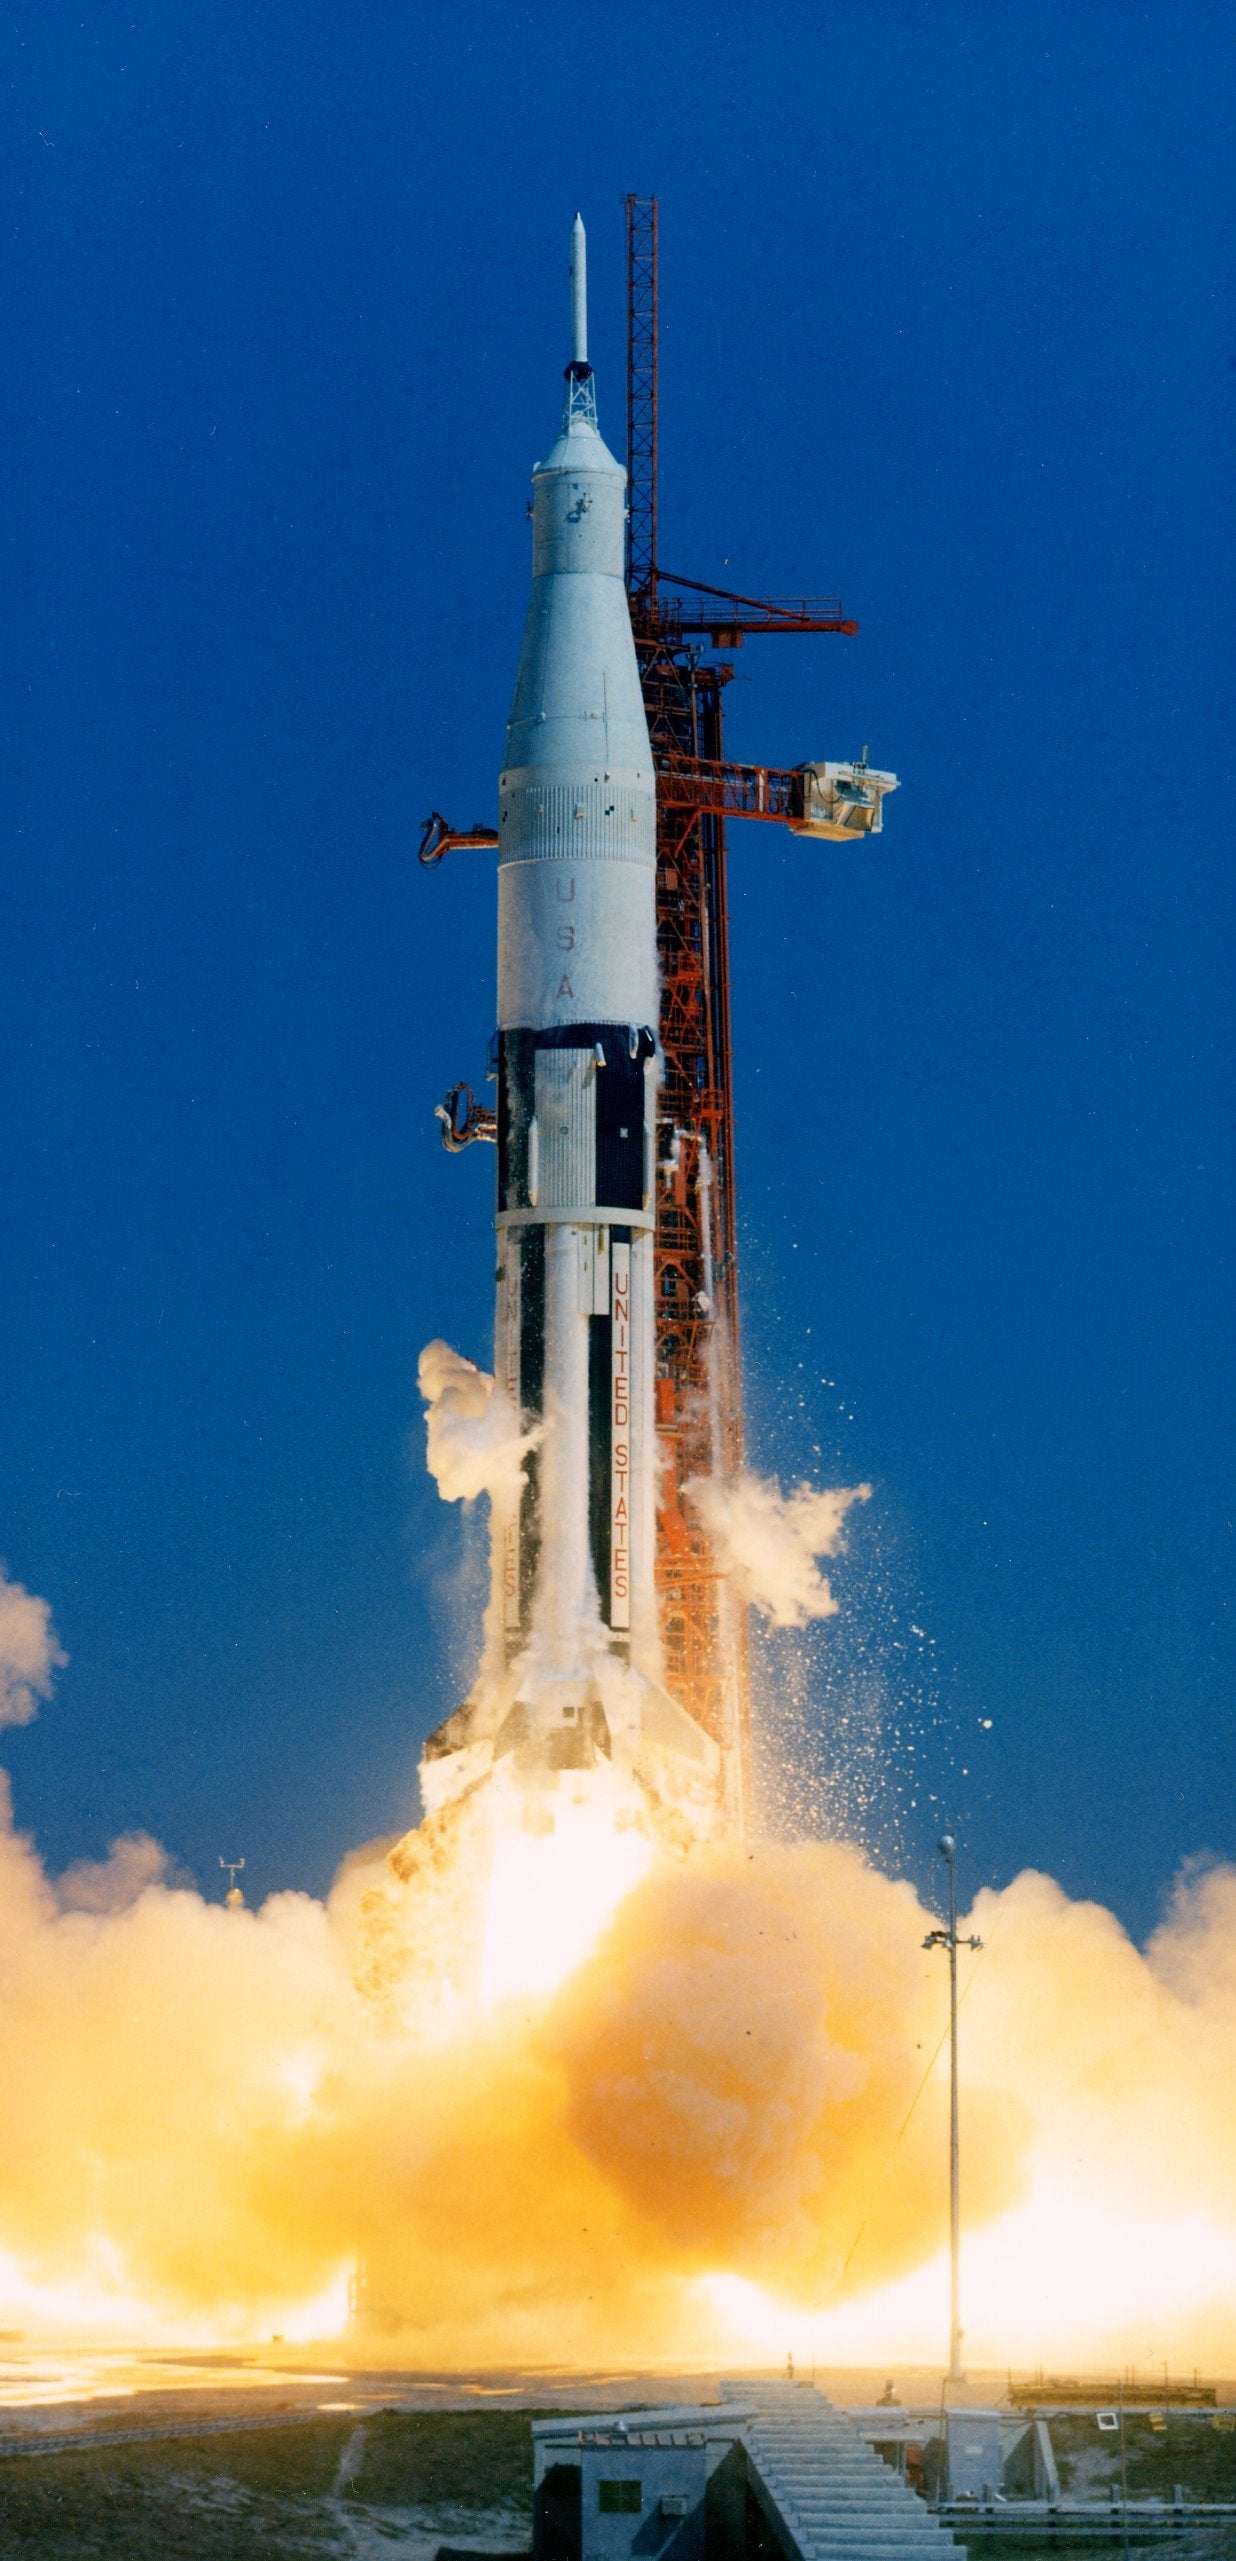 Saturn 1B Rocket Launch